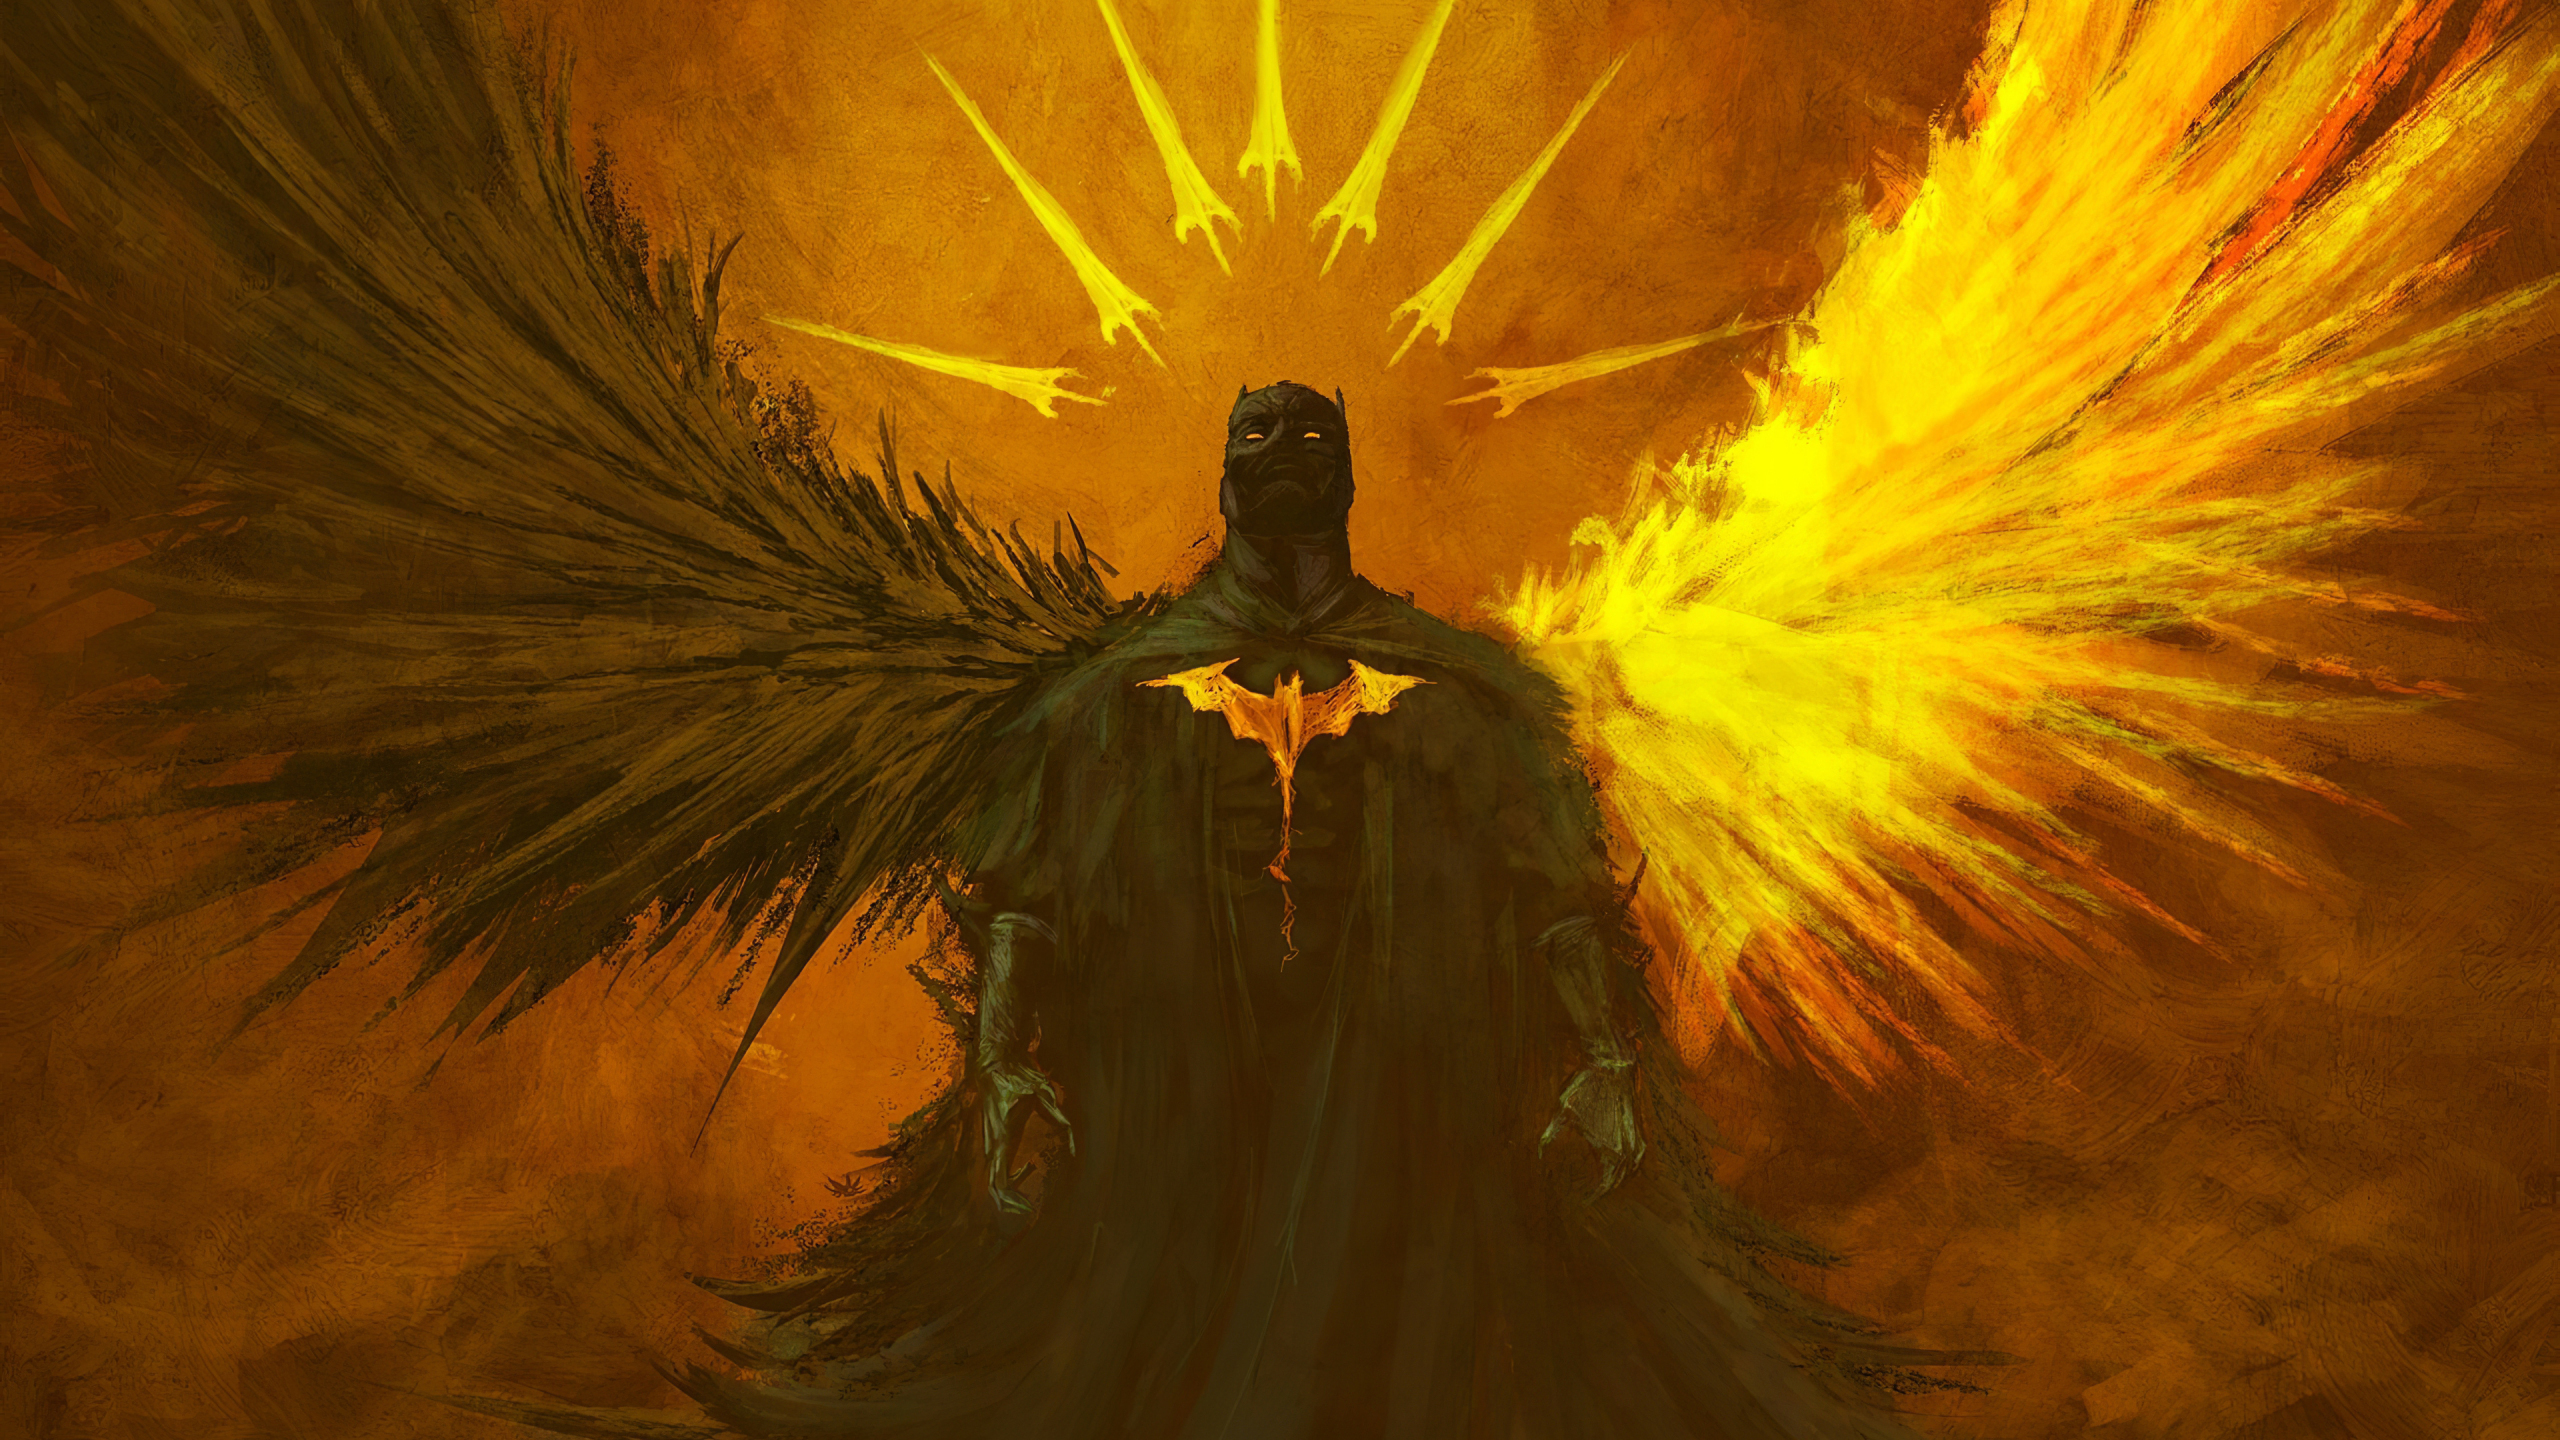 Batman, angel, wings of darkness and good, art, 2560x1440 wallpaper